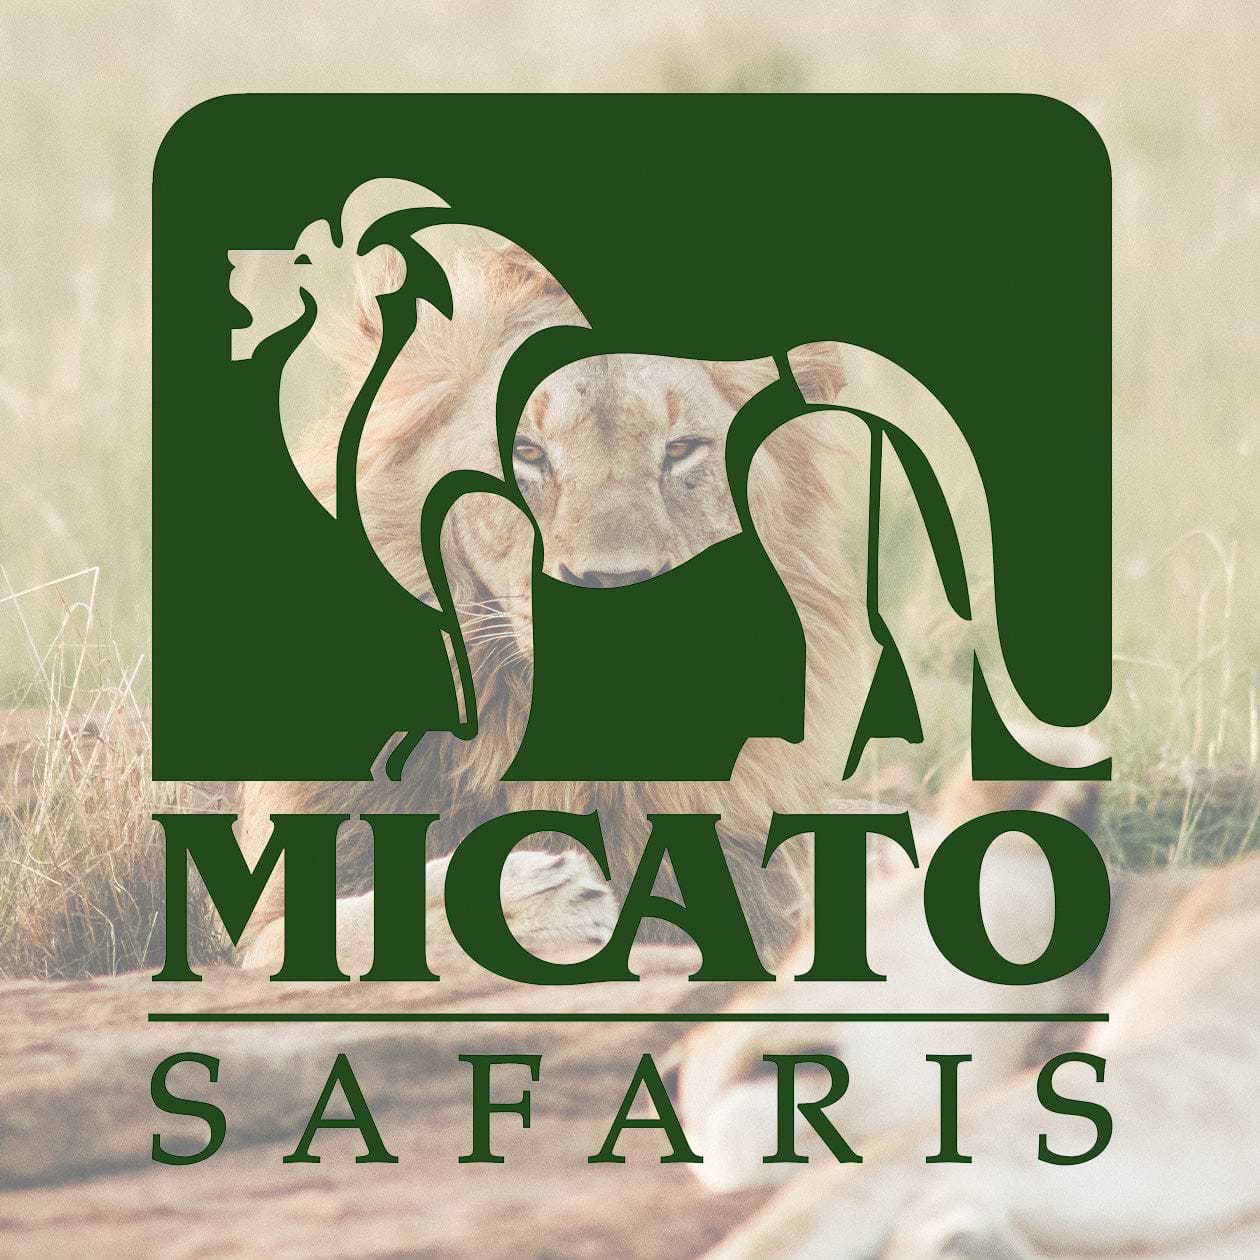 files/Micato_Logo.jpg